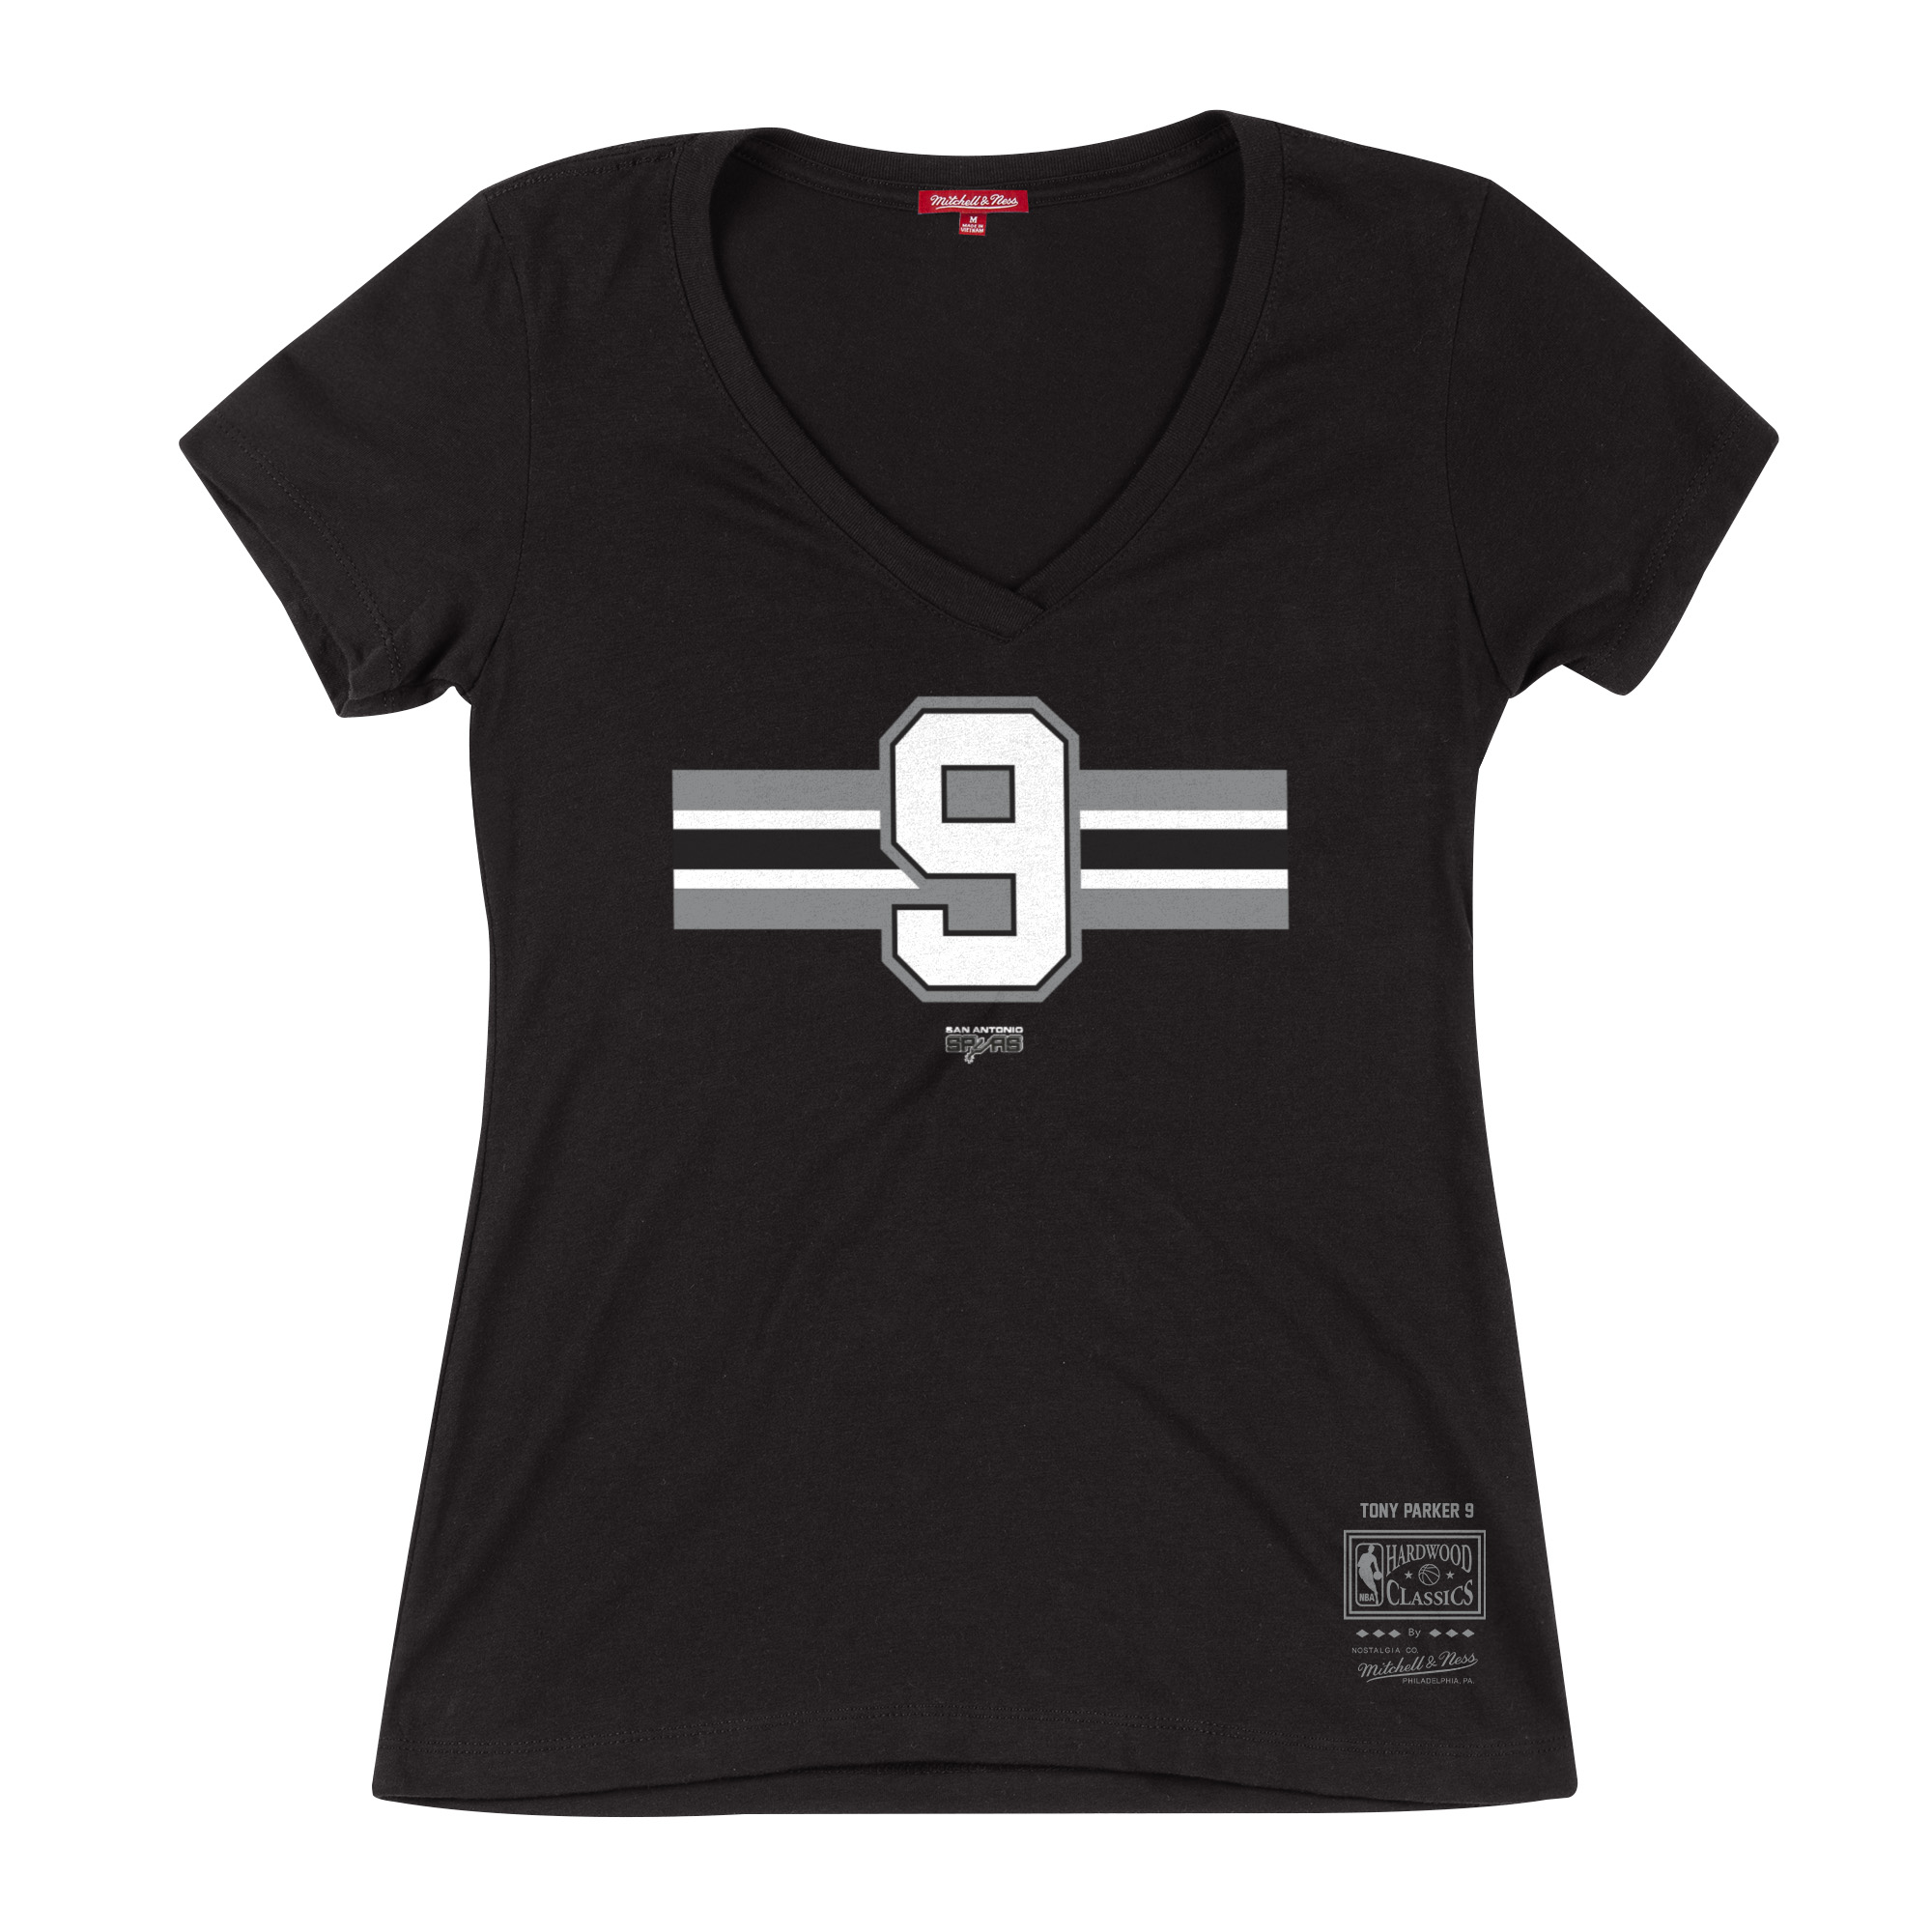 Women's Black/White San Antonio Spurs Team V-Neck T-Shirt